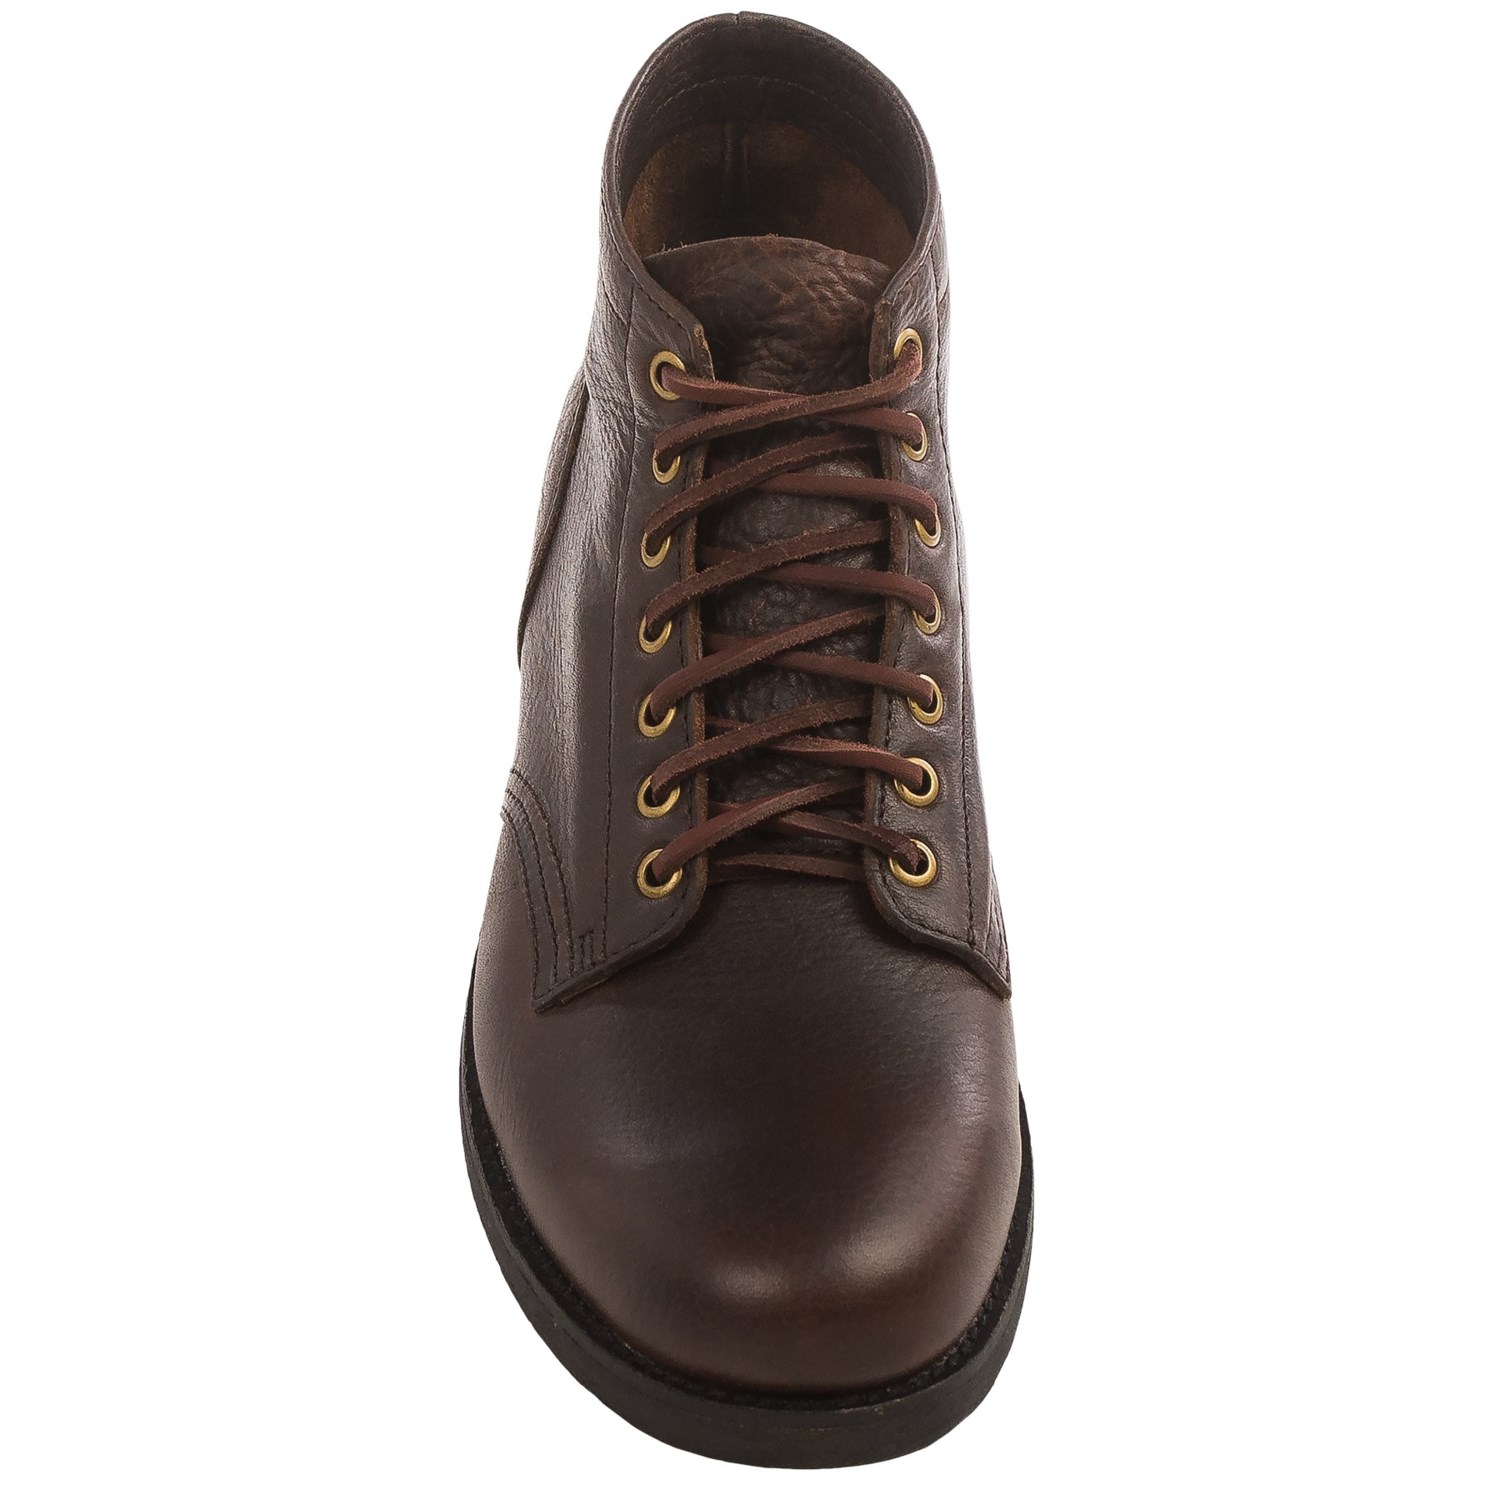 Eastland Jackson 1955 Chukka Boots (For Men) - Save 74%